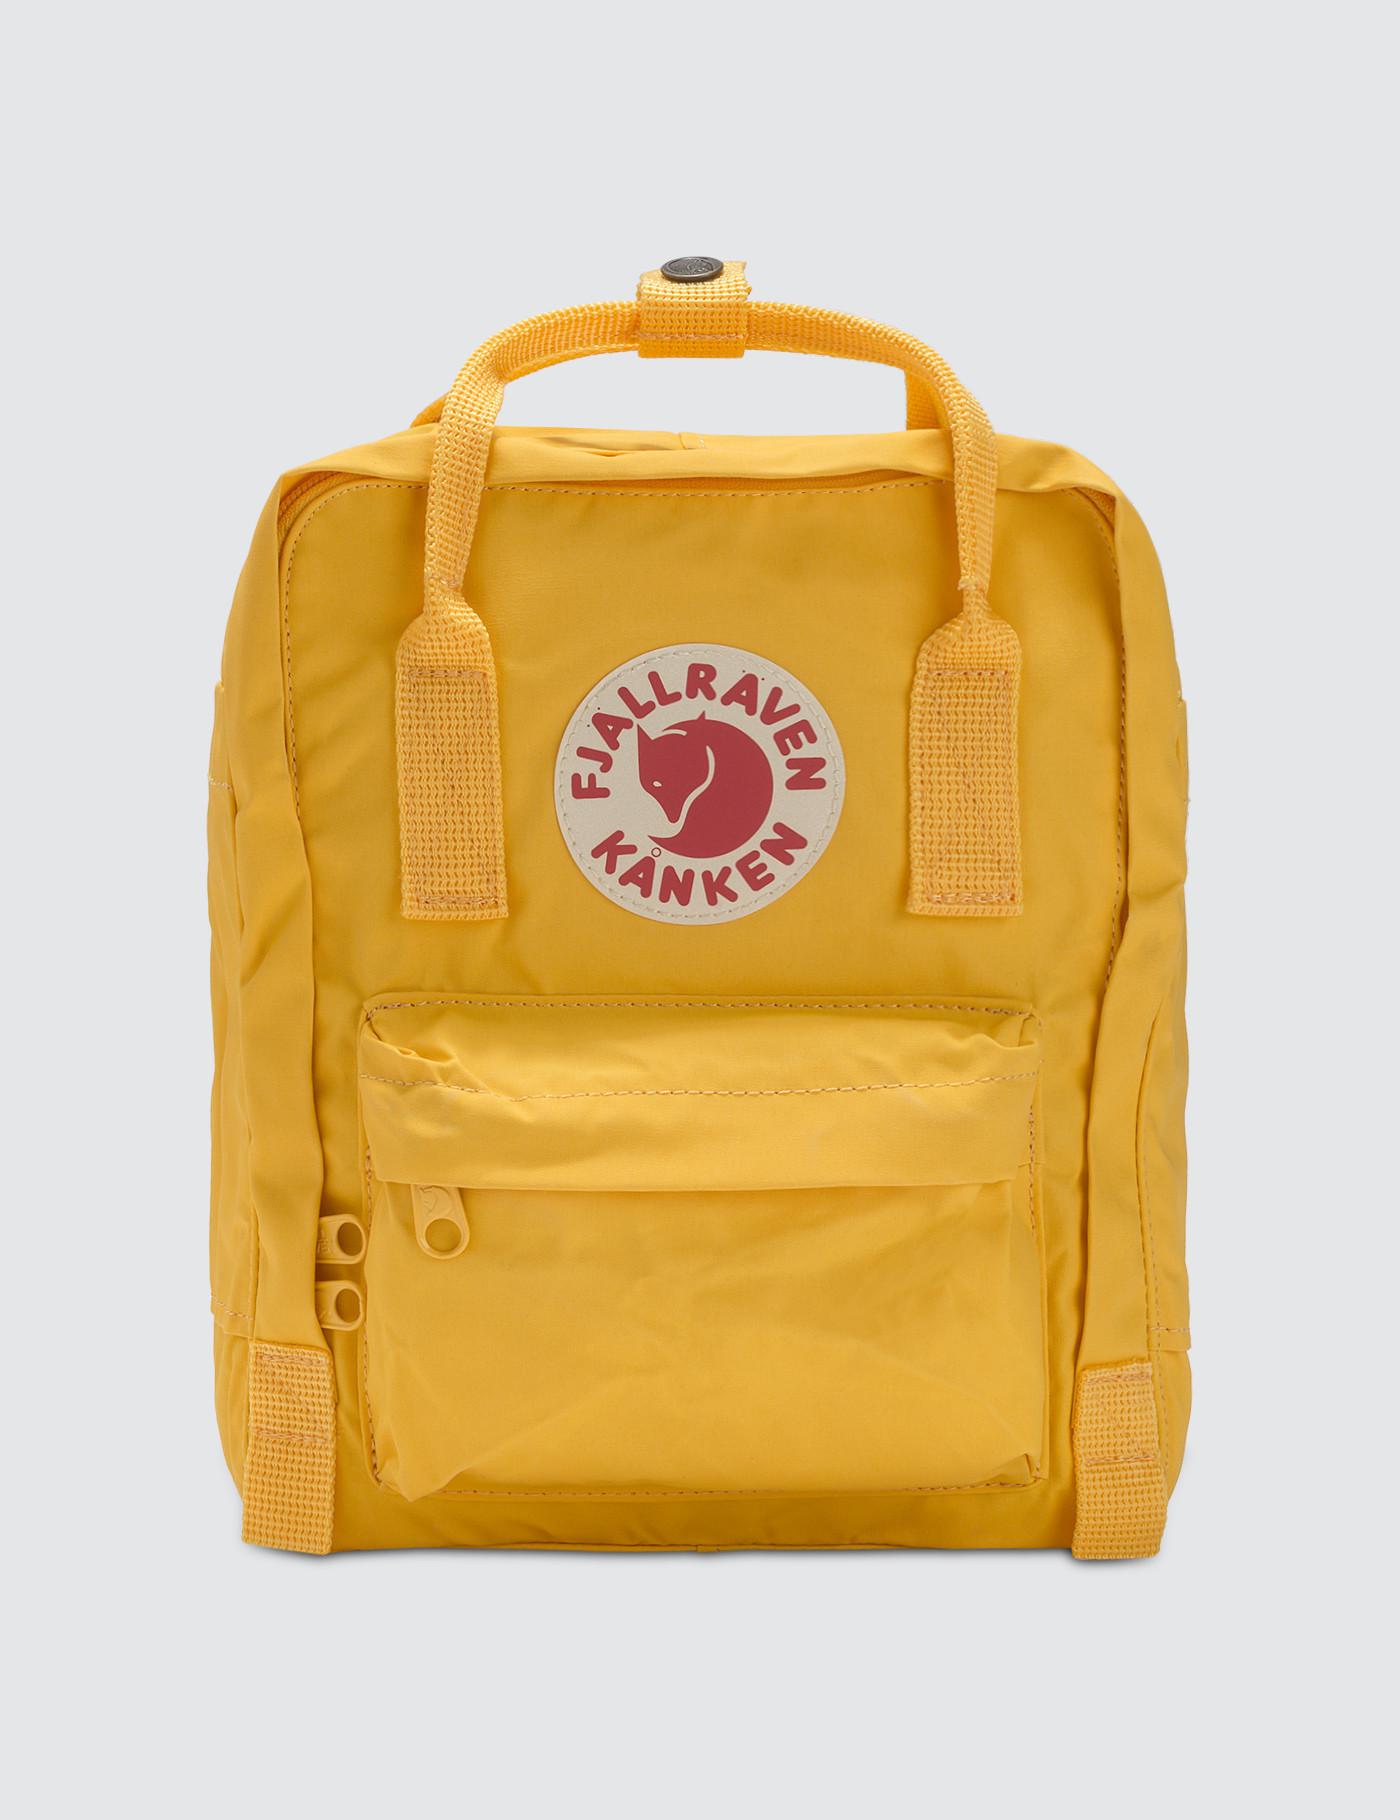 Fjallraven Kanken Classic Backpack in Golden Yellow (Yellow) for Men - Save  39% - Lyst